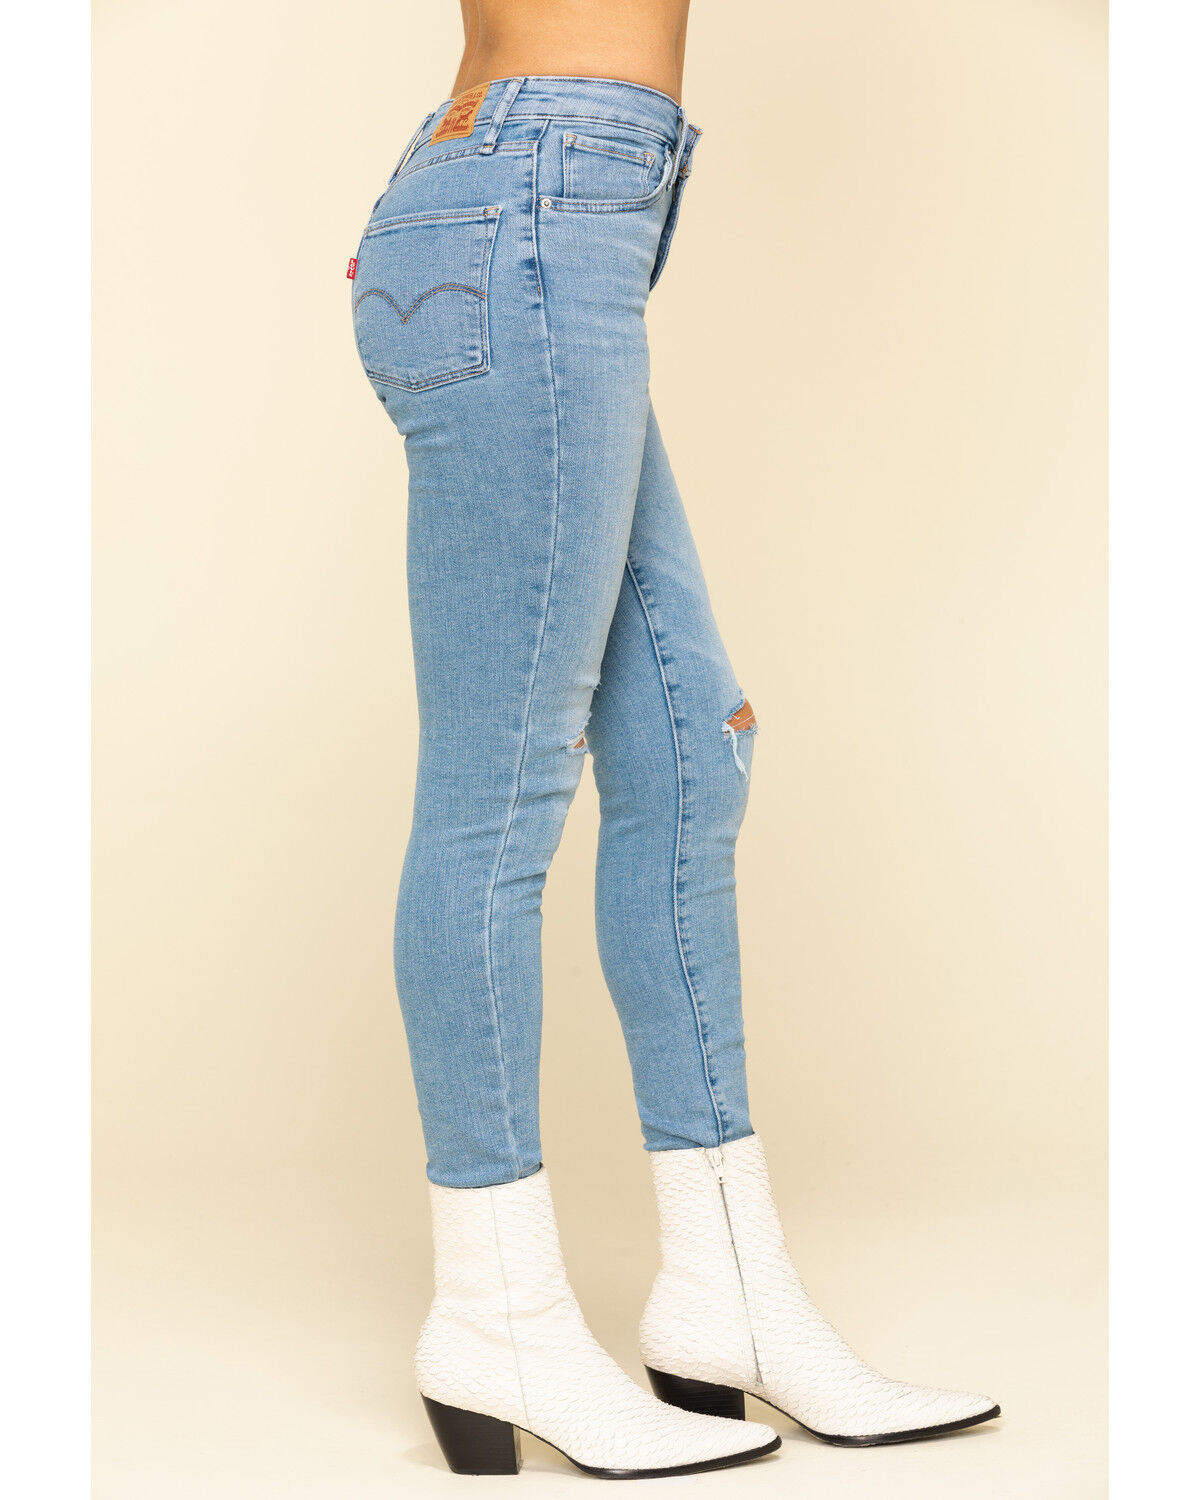 women's high rise levi jeans